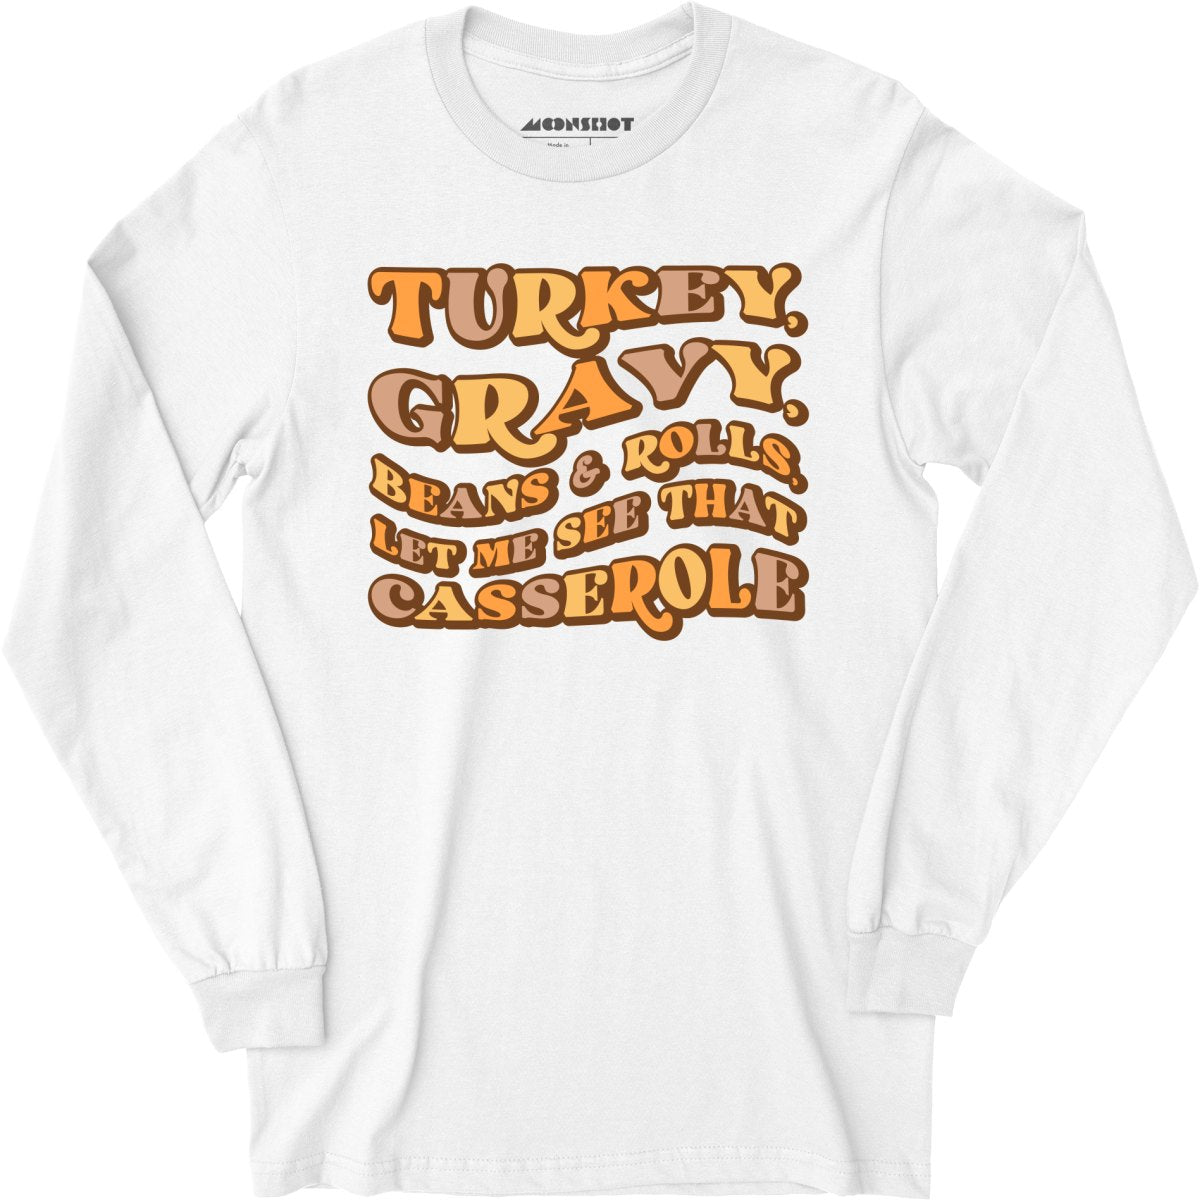 Turkey, Gravy, Beans & Rolls - Long Sleeve T-Shirt